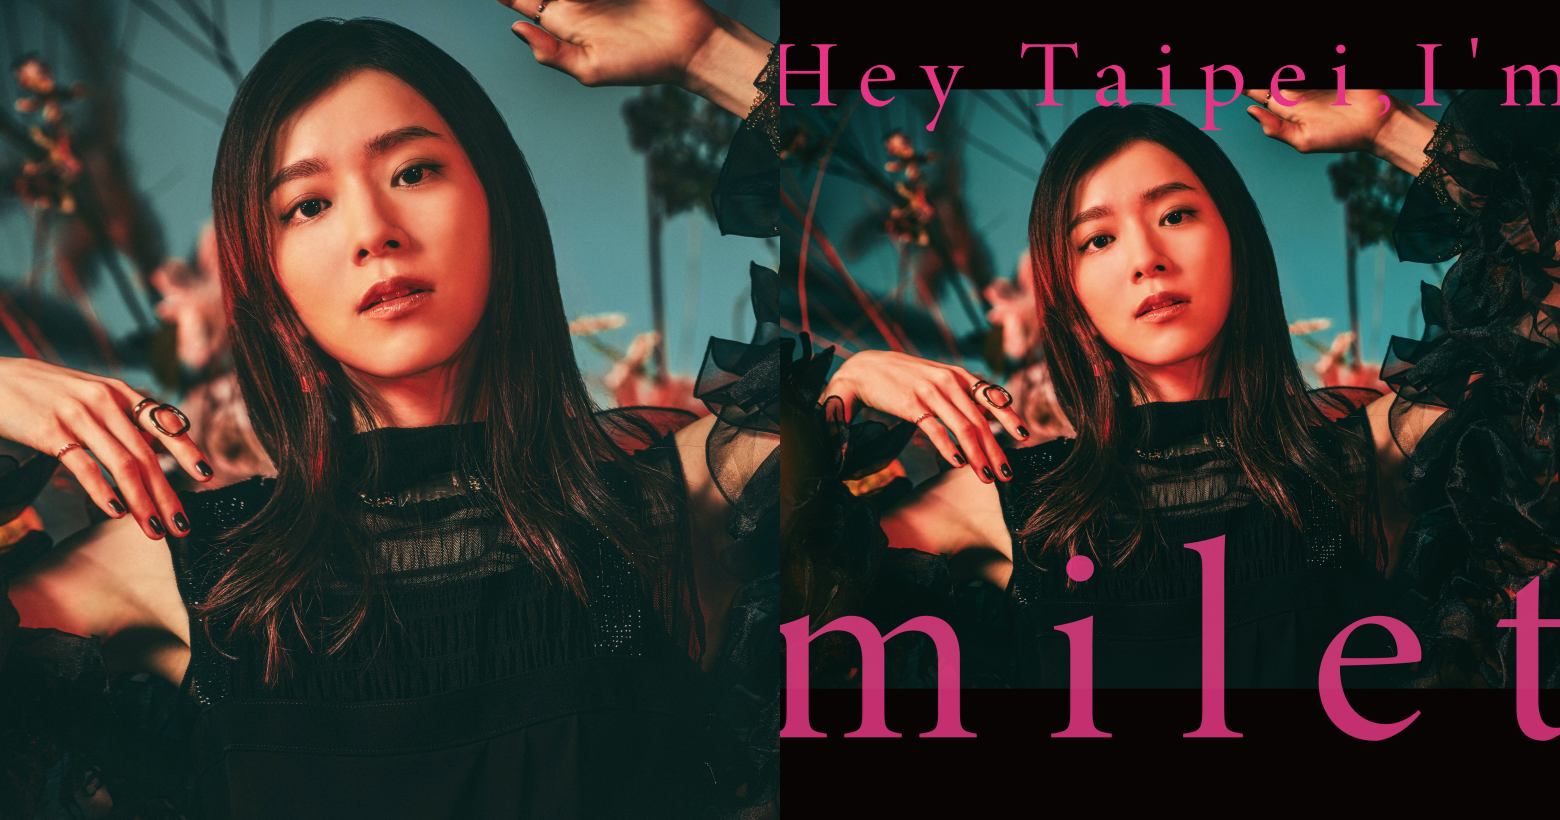 2023日本新聲代全才女神「milet」首次海外個唱「Hey Taipei, I'm milet 